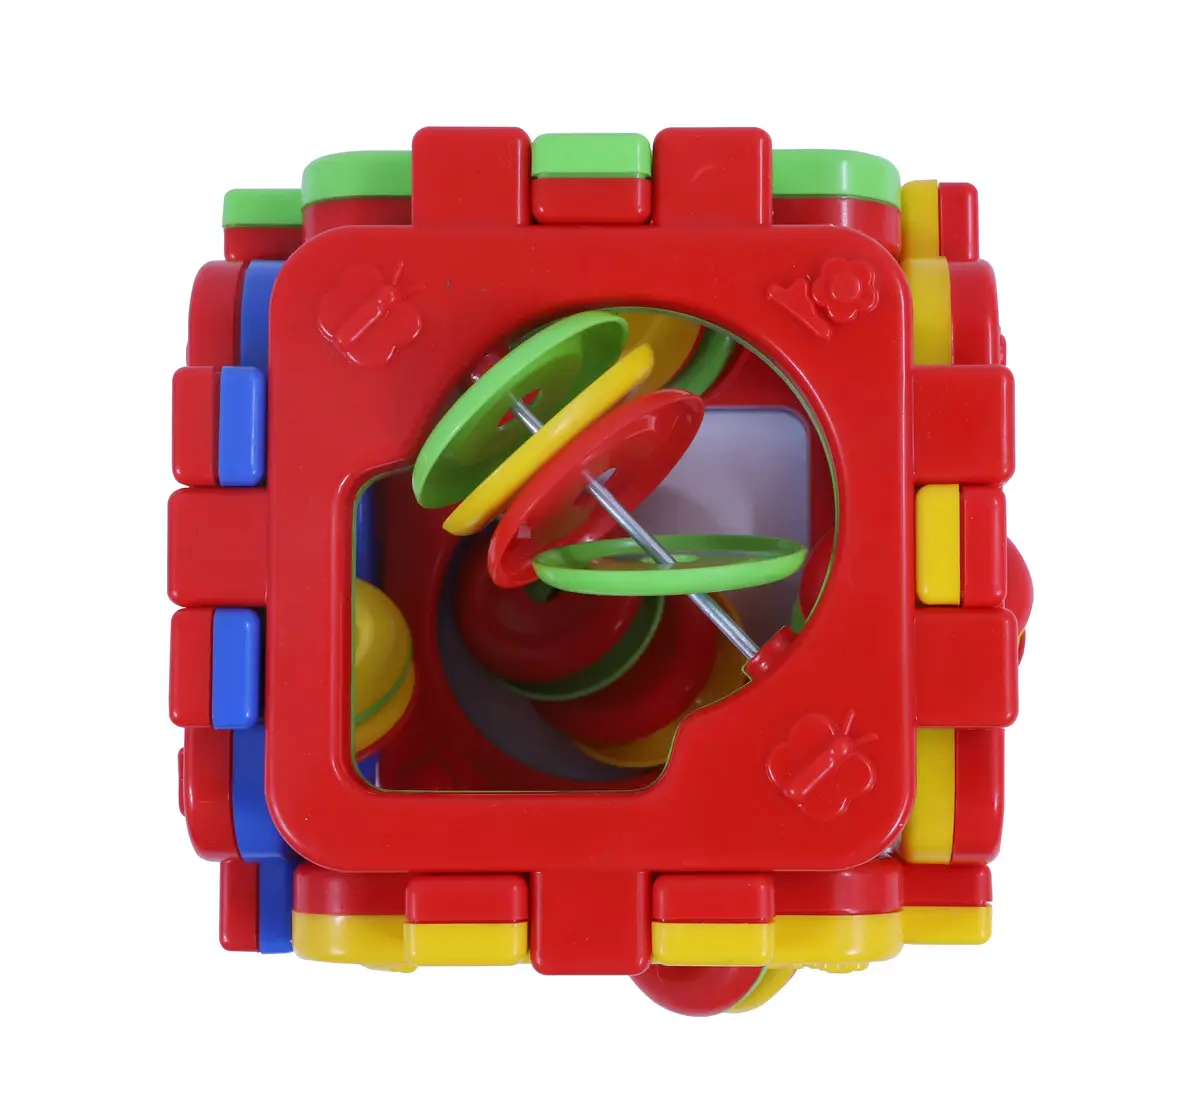 Toyzone Rattle Cubie 81388 Multicolour, 3Y+